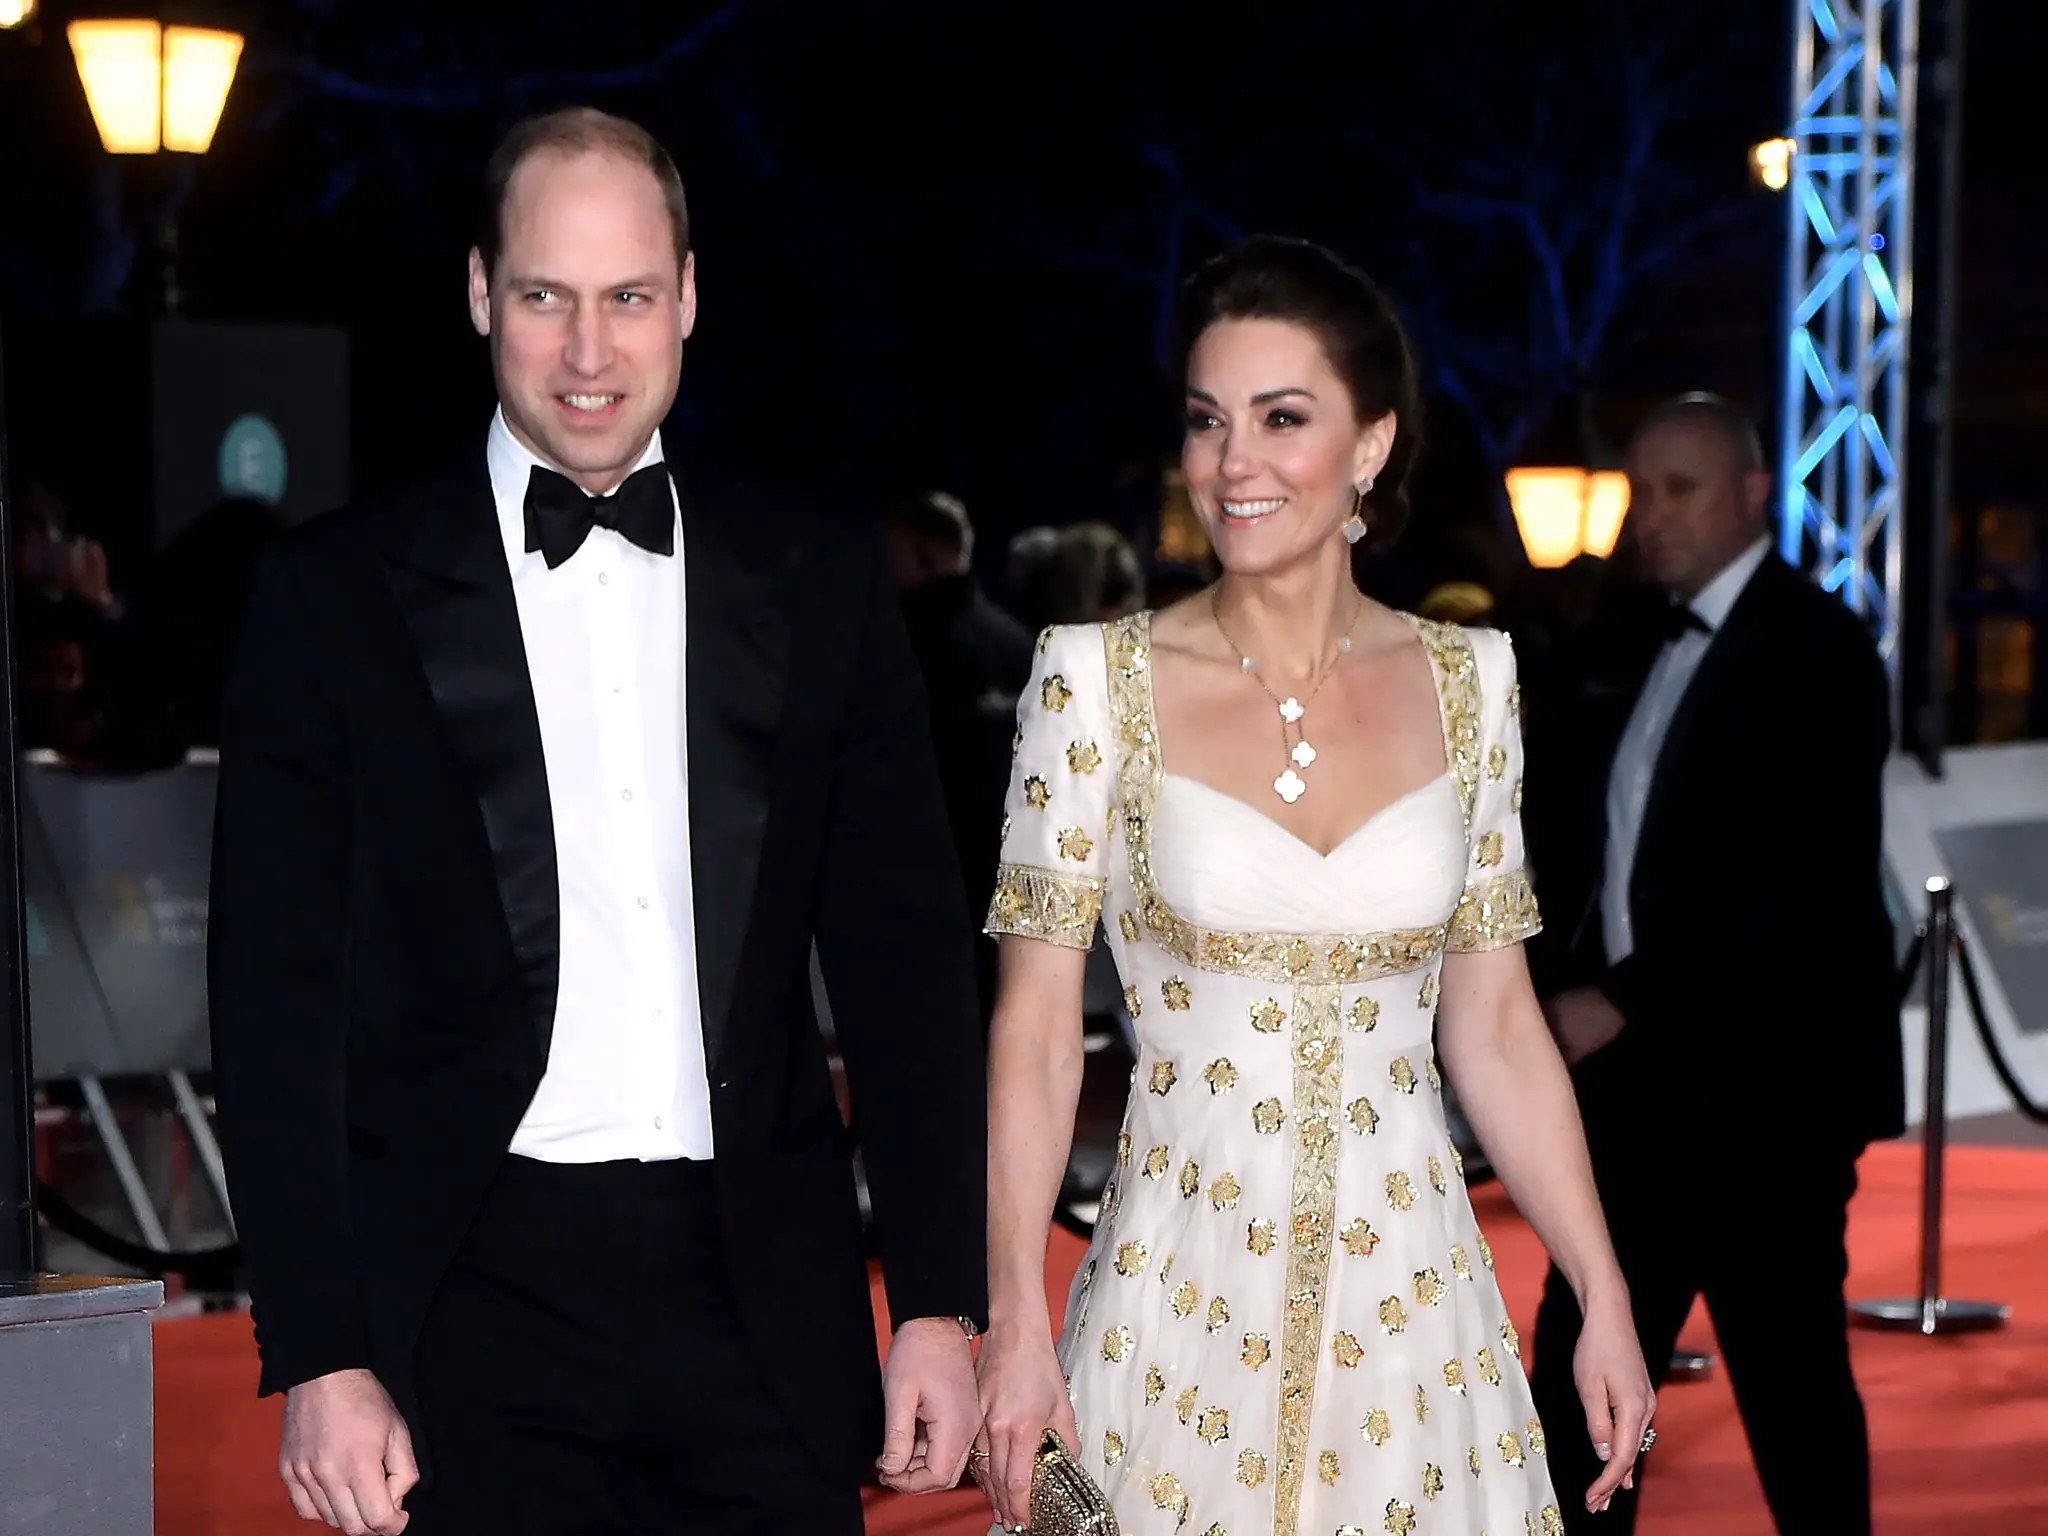 Duke and Duchess of Cambridge at BAFTA 2020